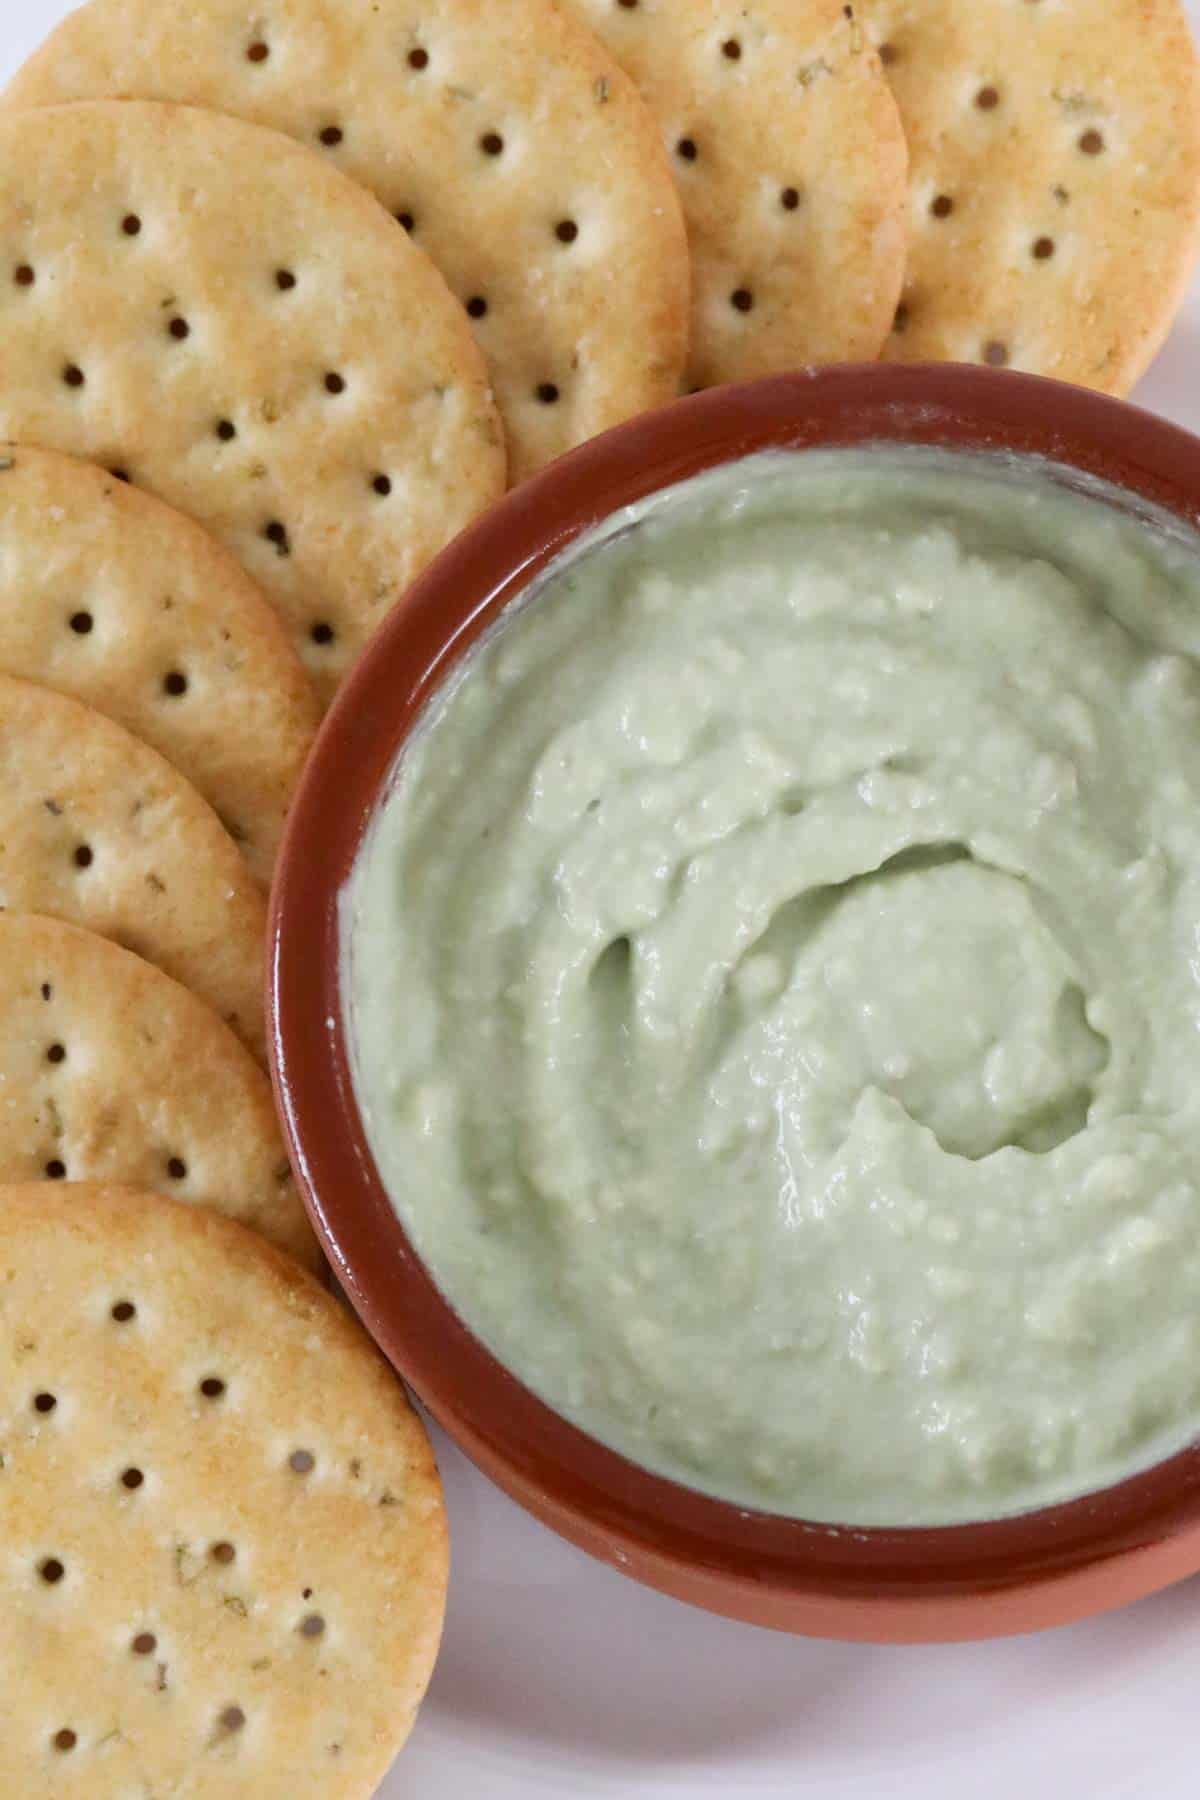 Crackers next to a creamy green dip.